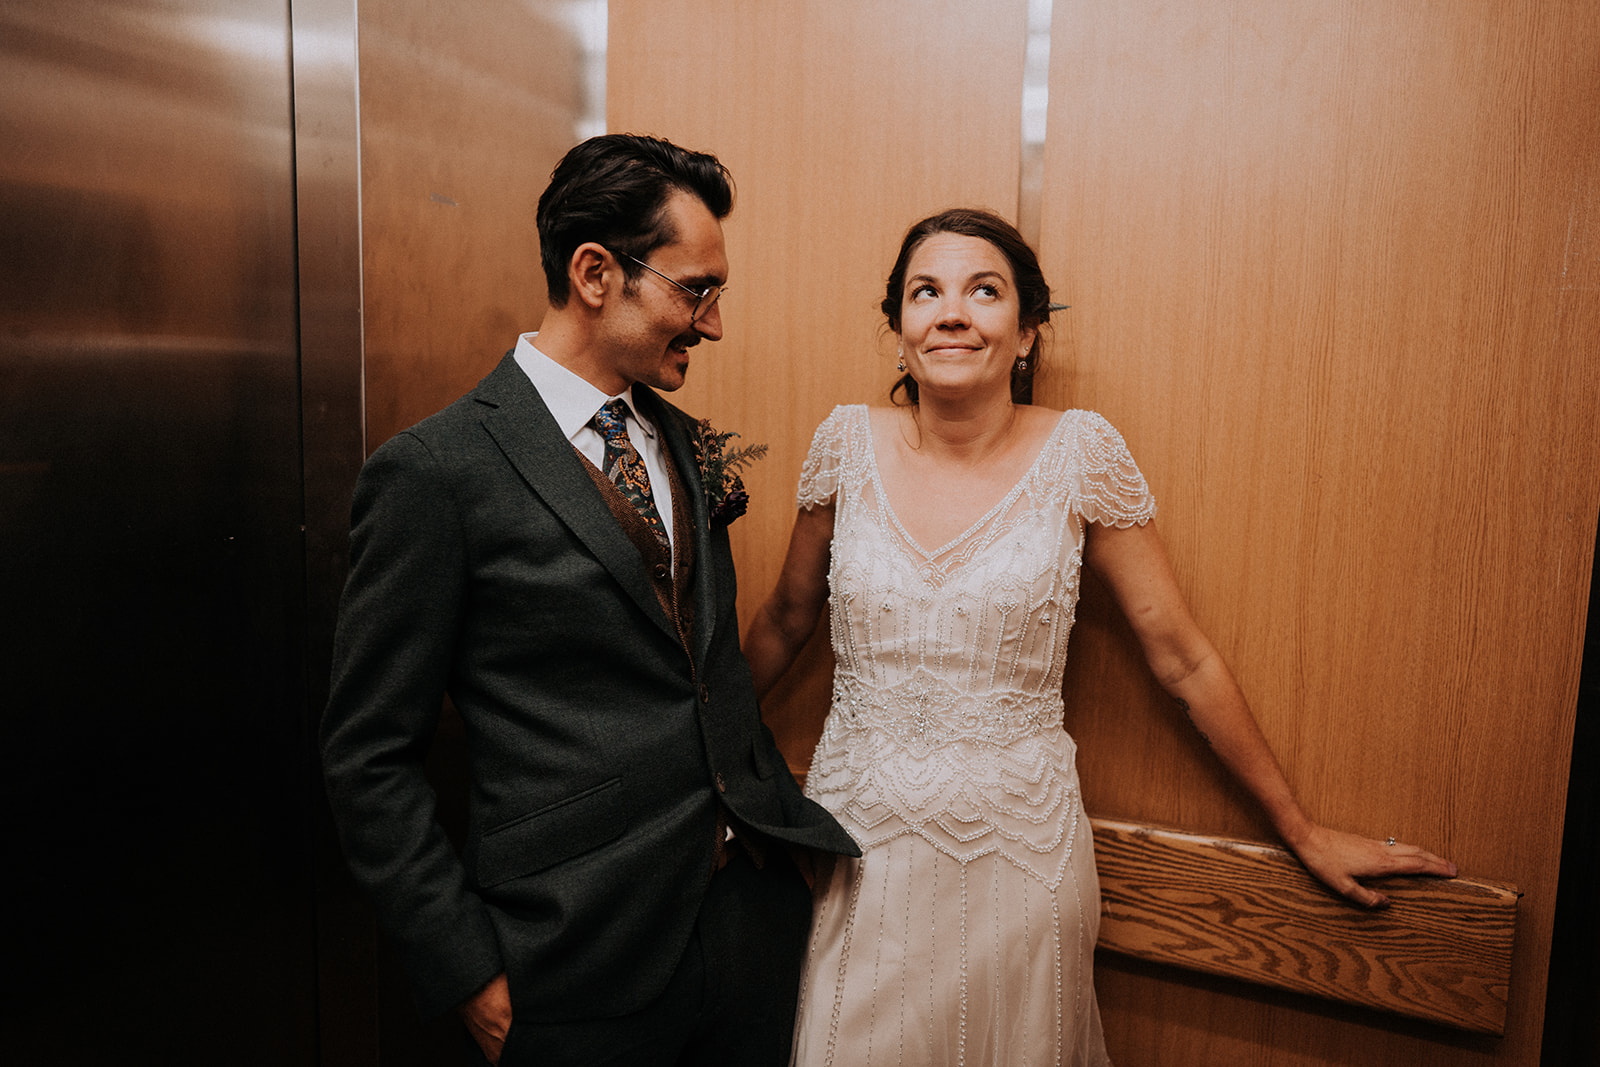 Bride & Groom in the elevator on wedding day